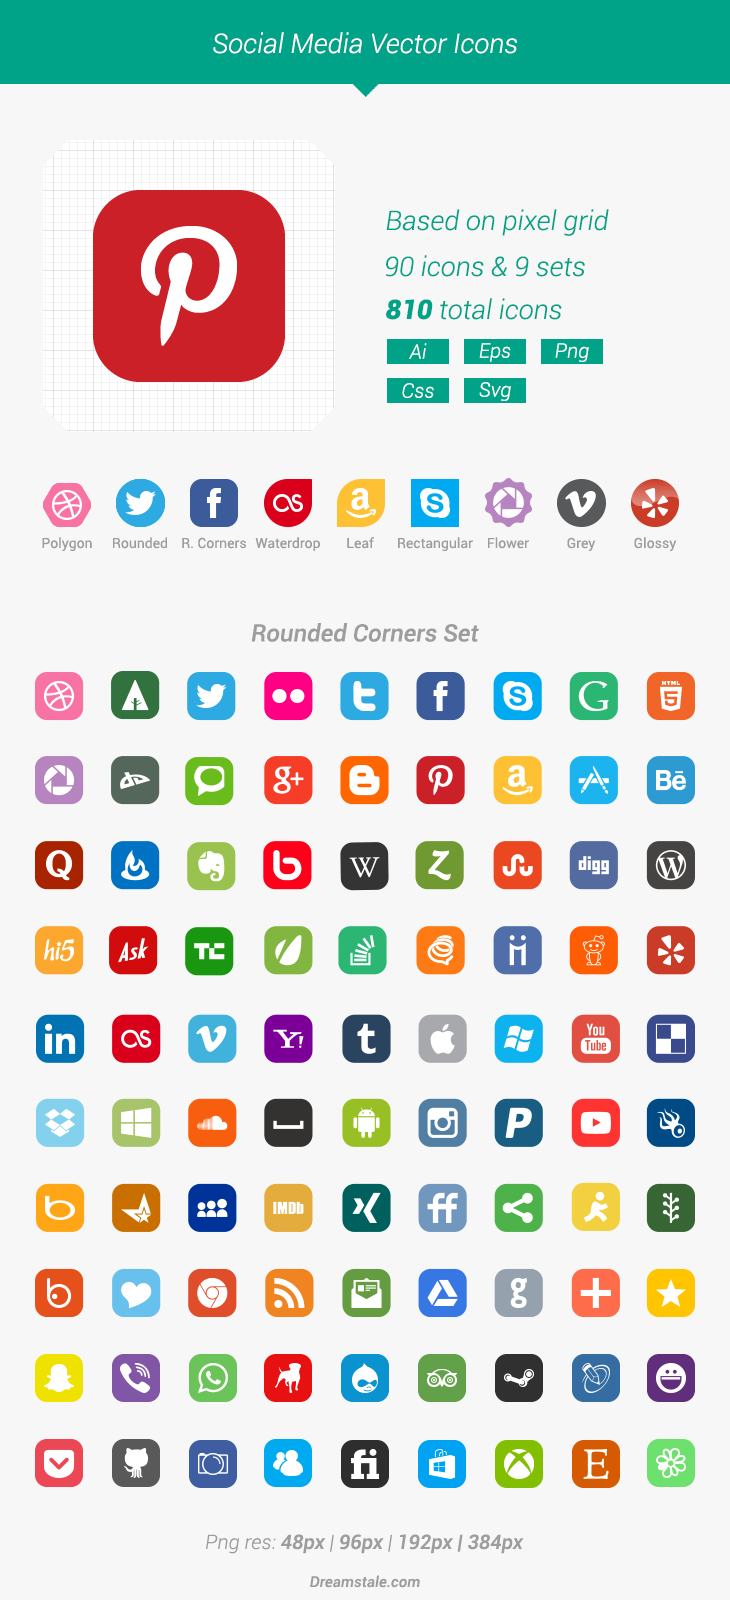 freebie-90-free-social-media-vector-icons